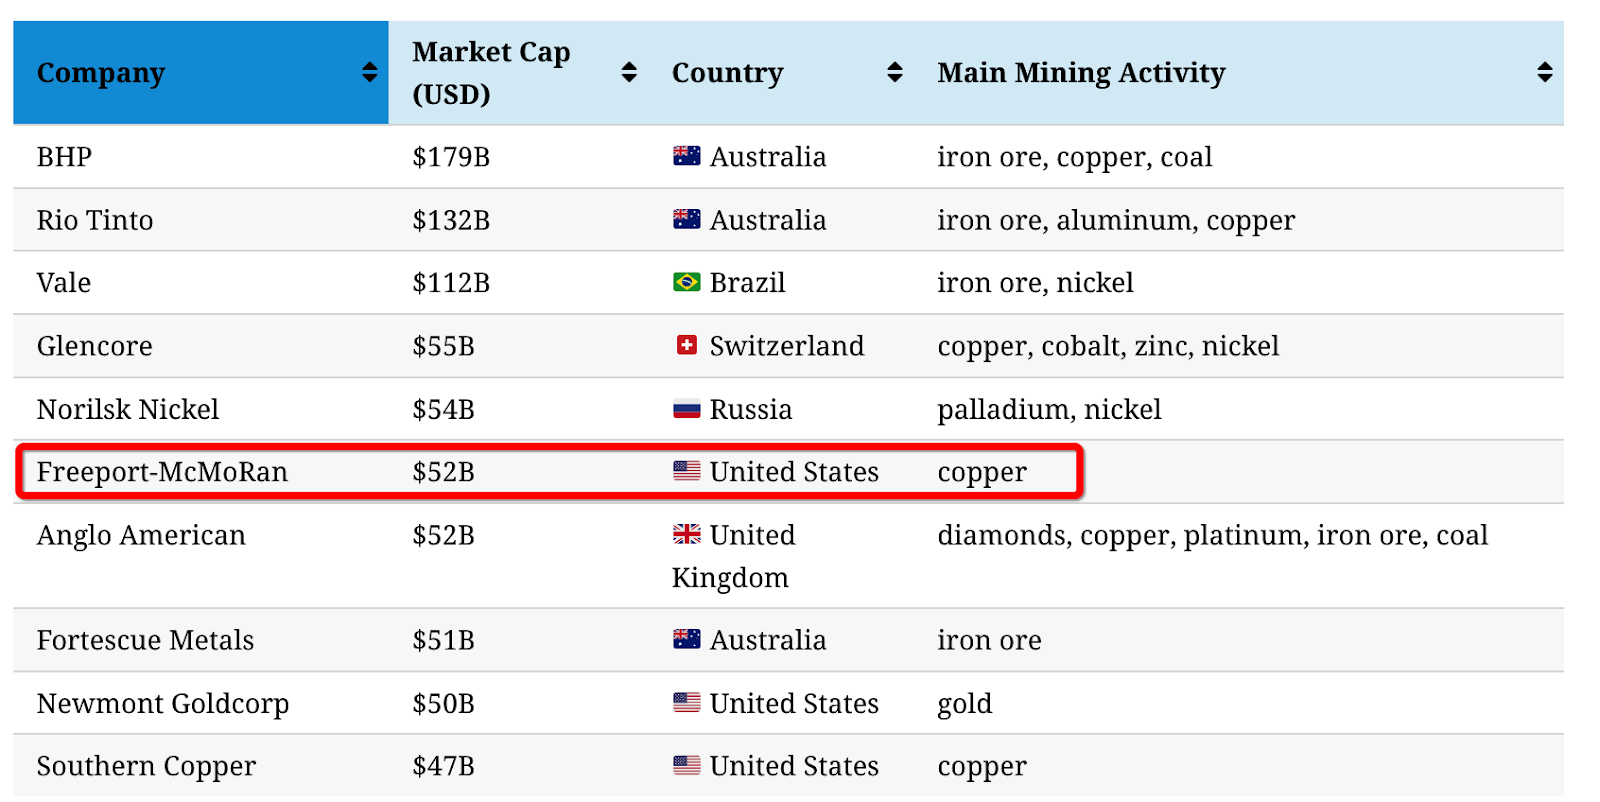 Top 10 Global Mining Companies